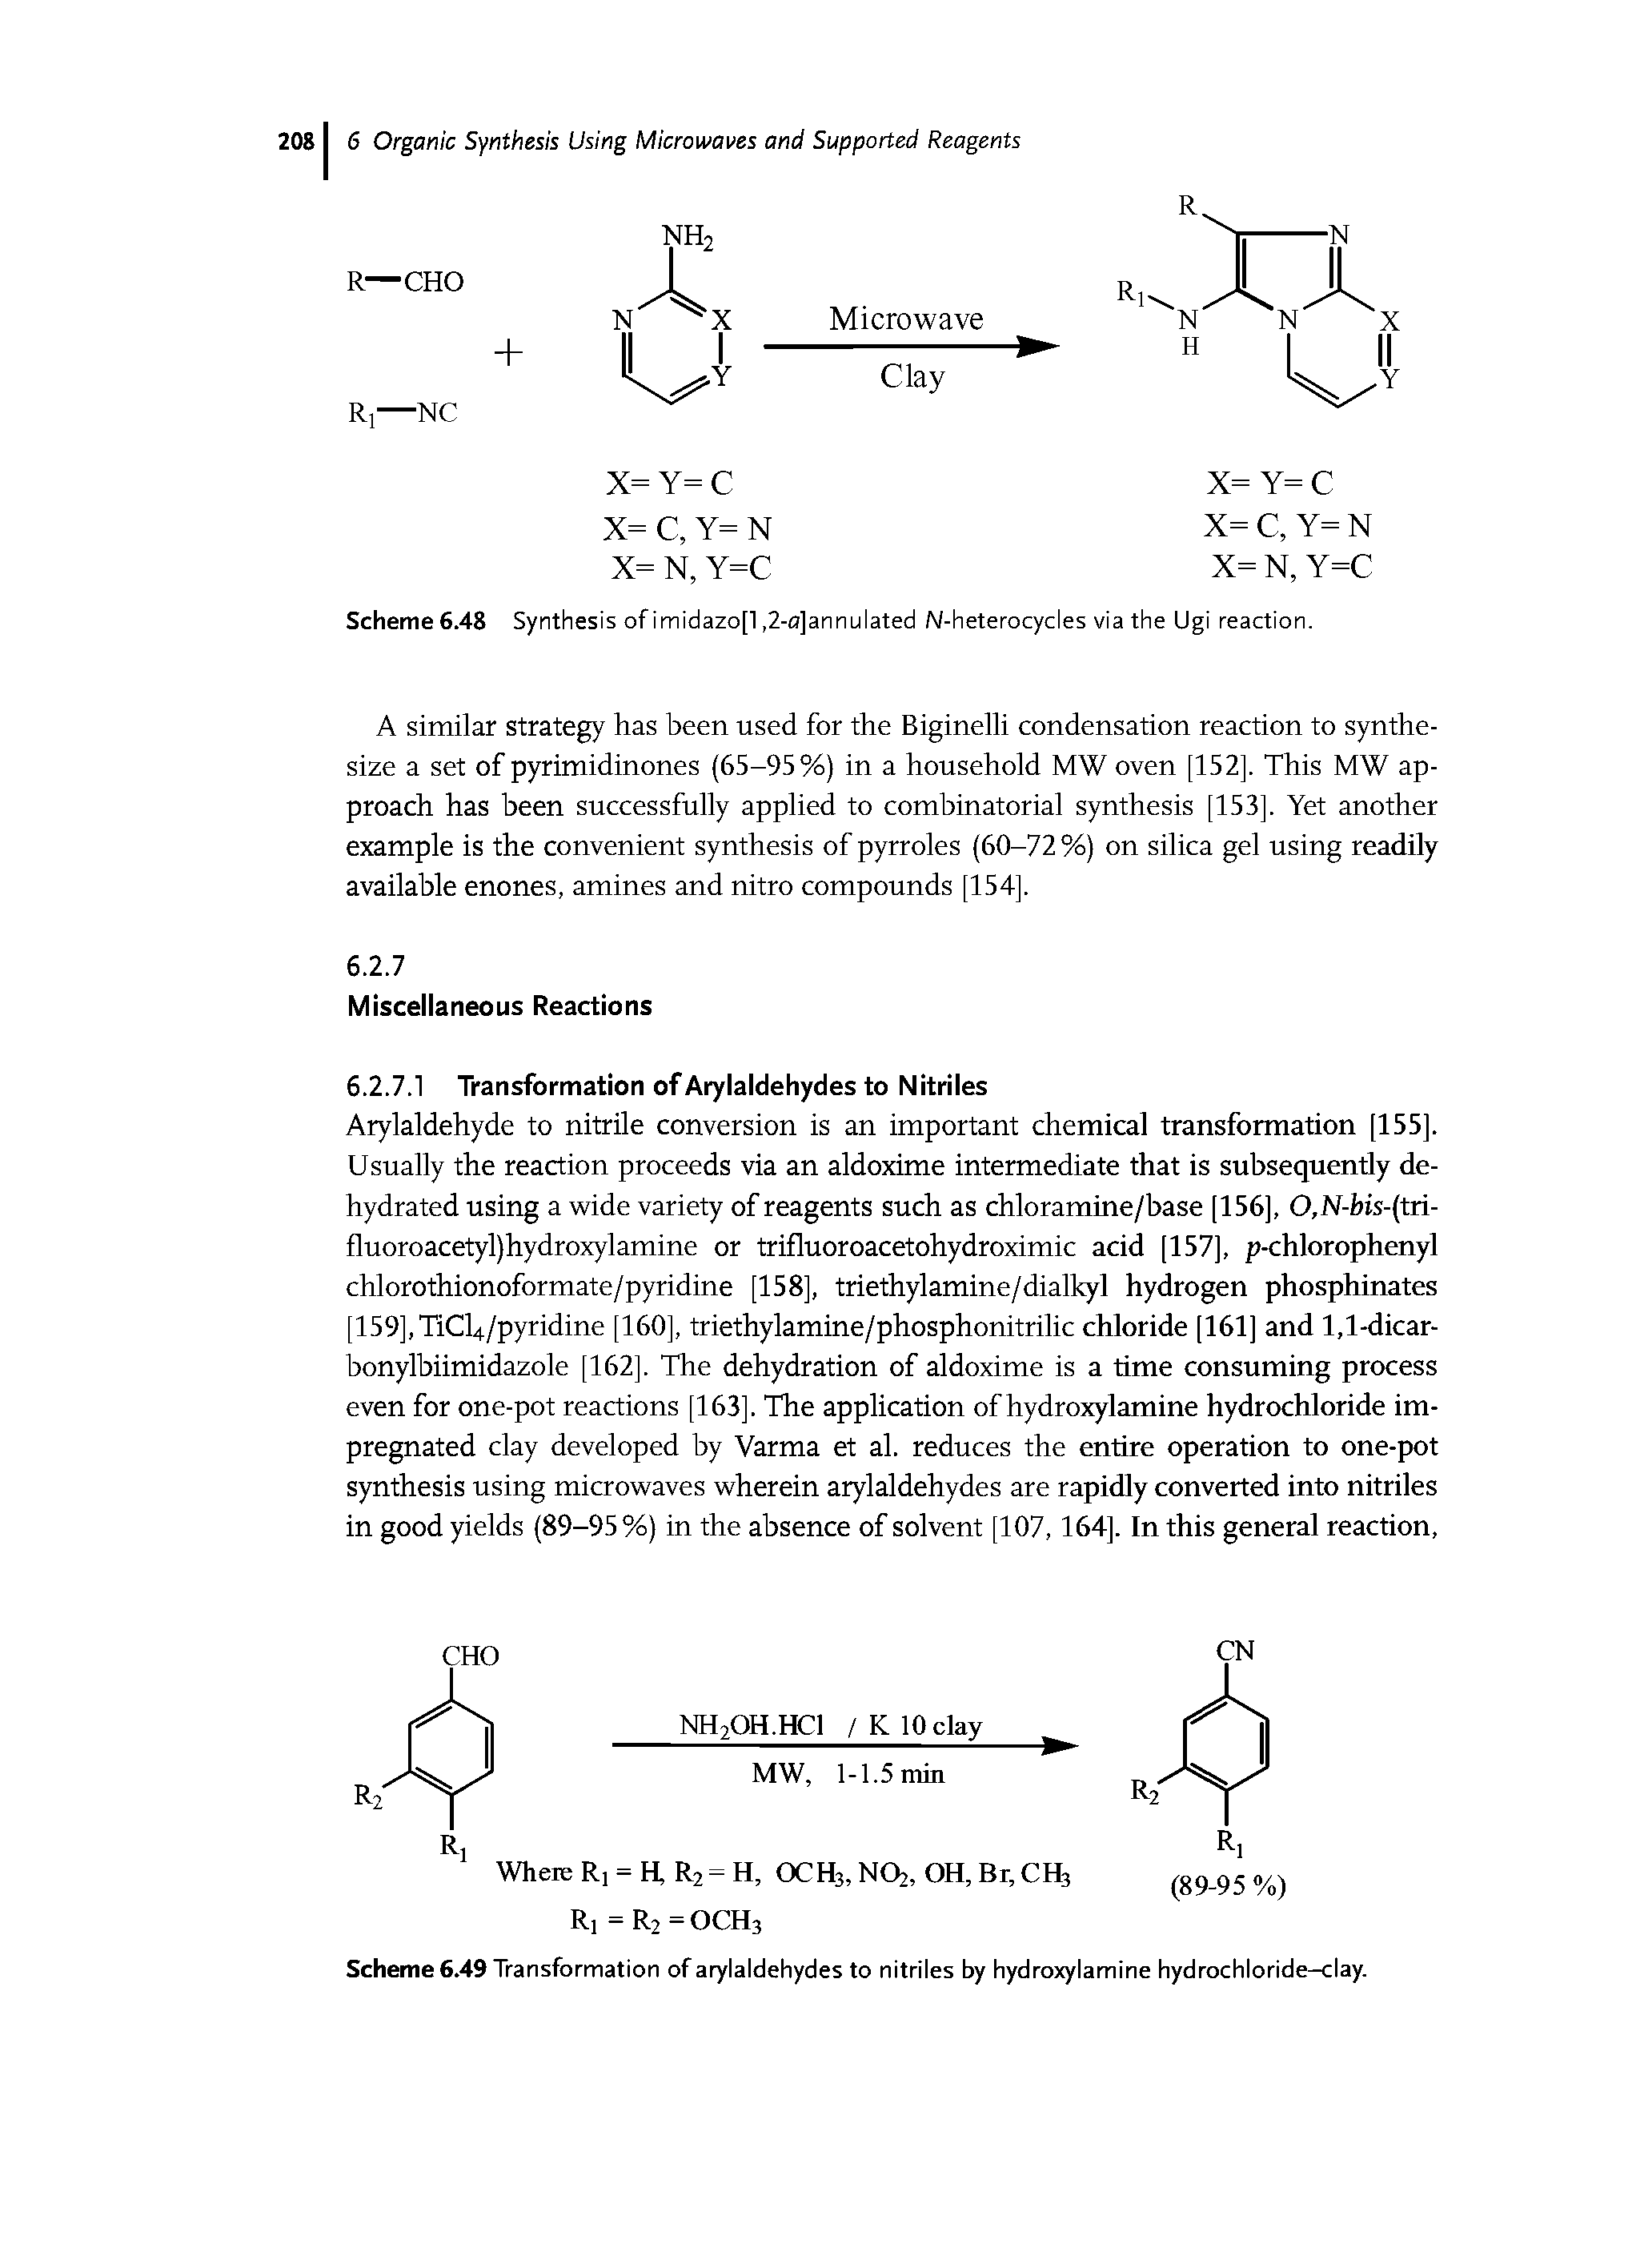 Scheme 6.49 Transformation of arylaldehydes to nitriles by hydroxylamine hydrochloride-clay.